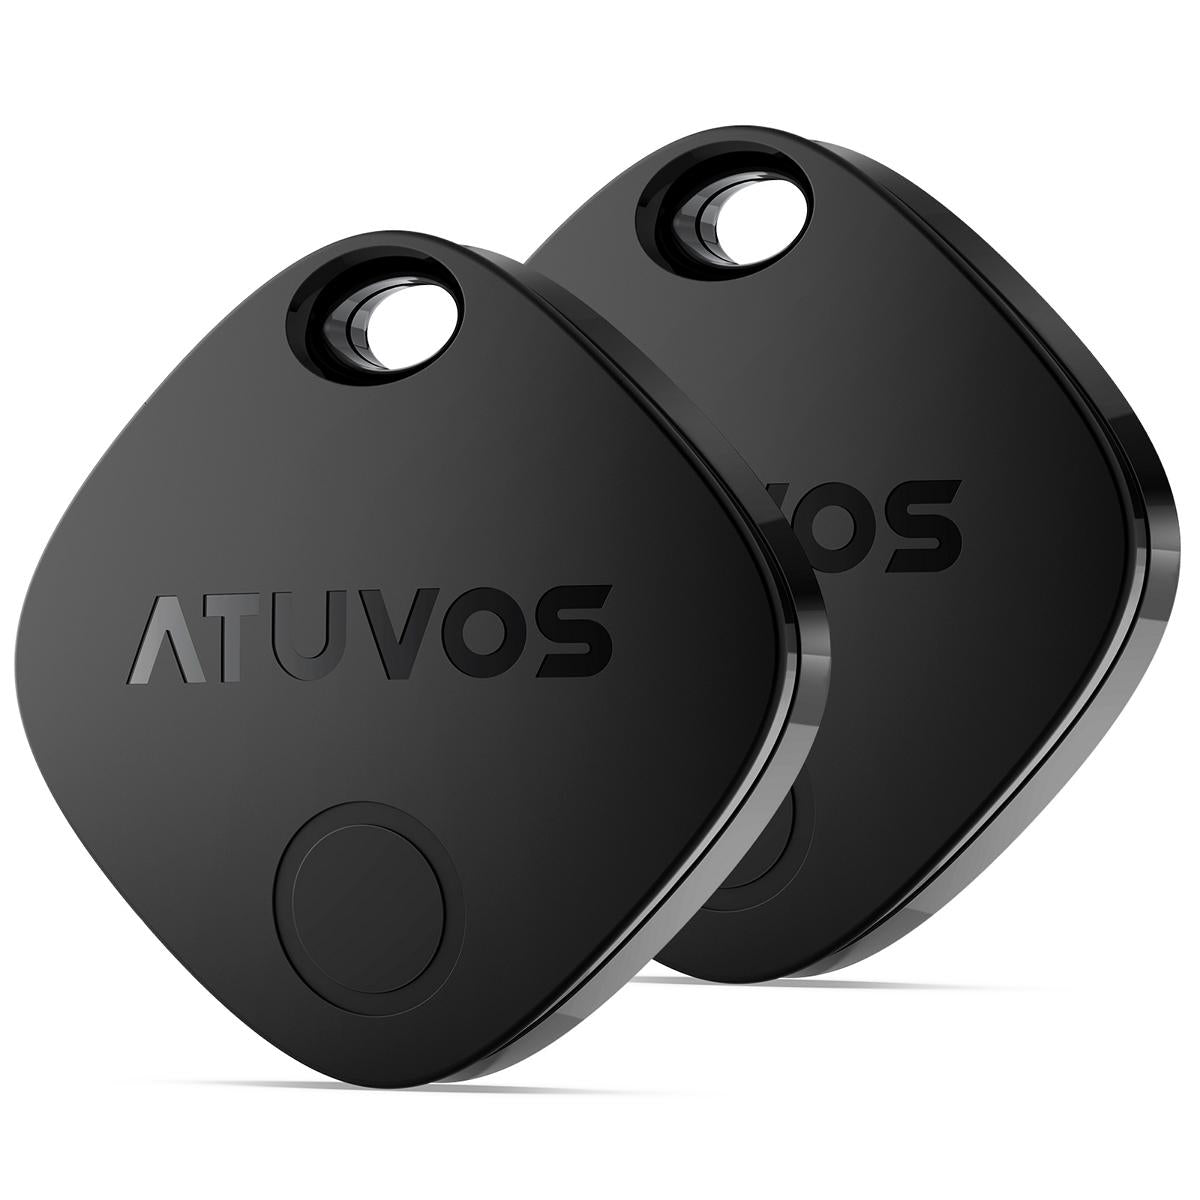 ATUVOS Black Item Finder 2 PCS (iOS Only)